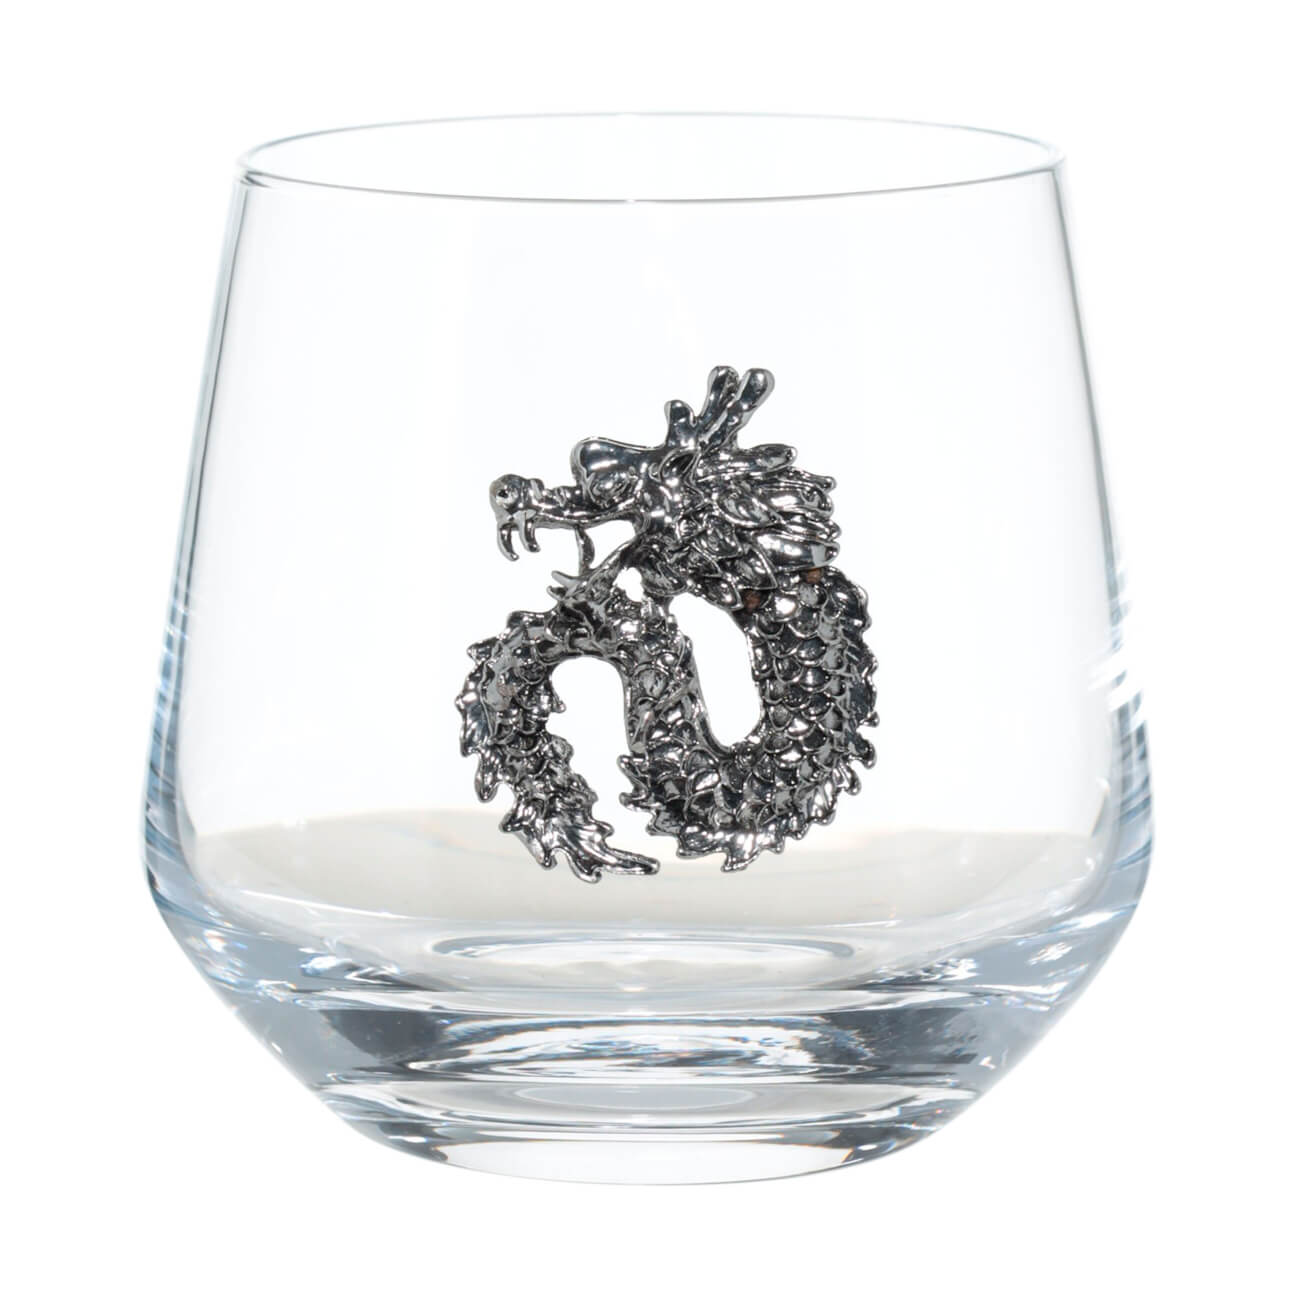 Стакан для виски, 370 мл, стекло/металл, Серебристый дракон, Lux elements изображение № 1